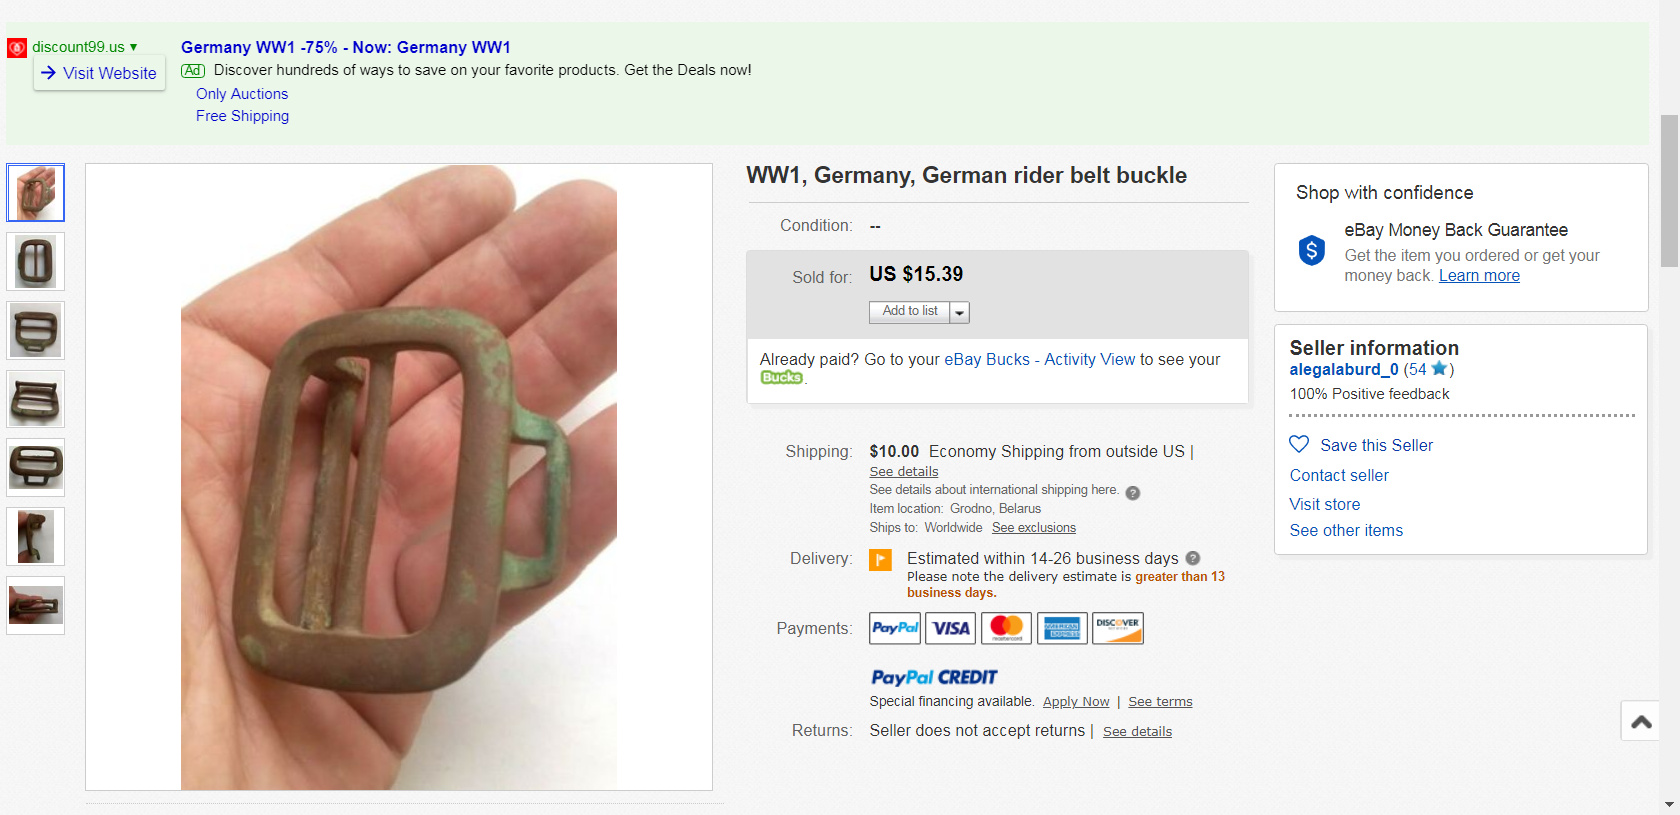 WW1, Germany, German rider belt buckle  eBay - Google Chrome 7192019 33337 PM.bmp.jpg